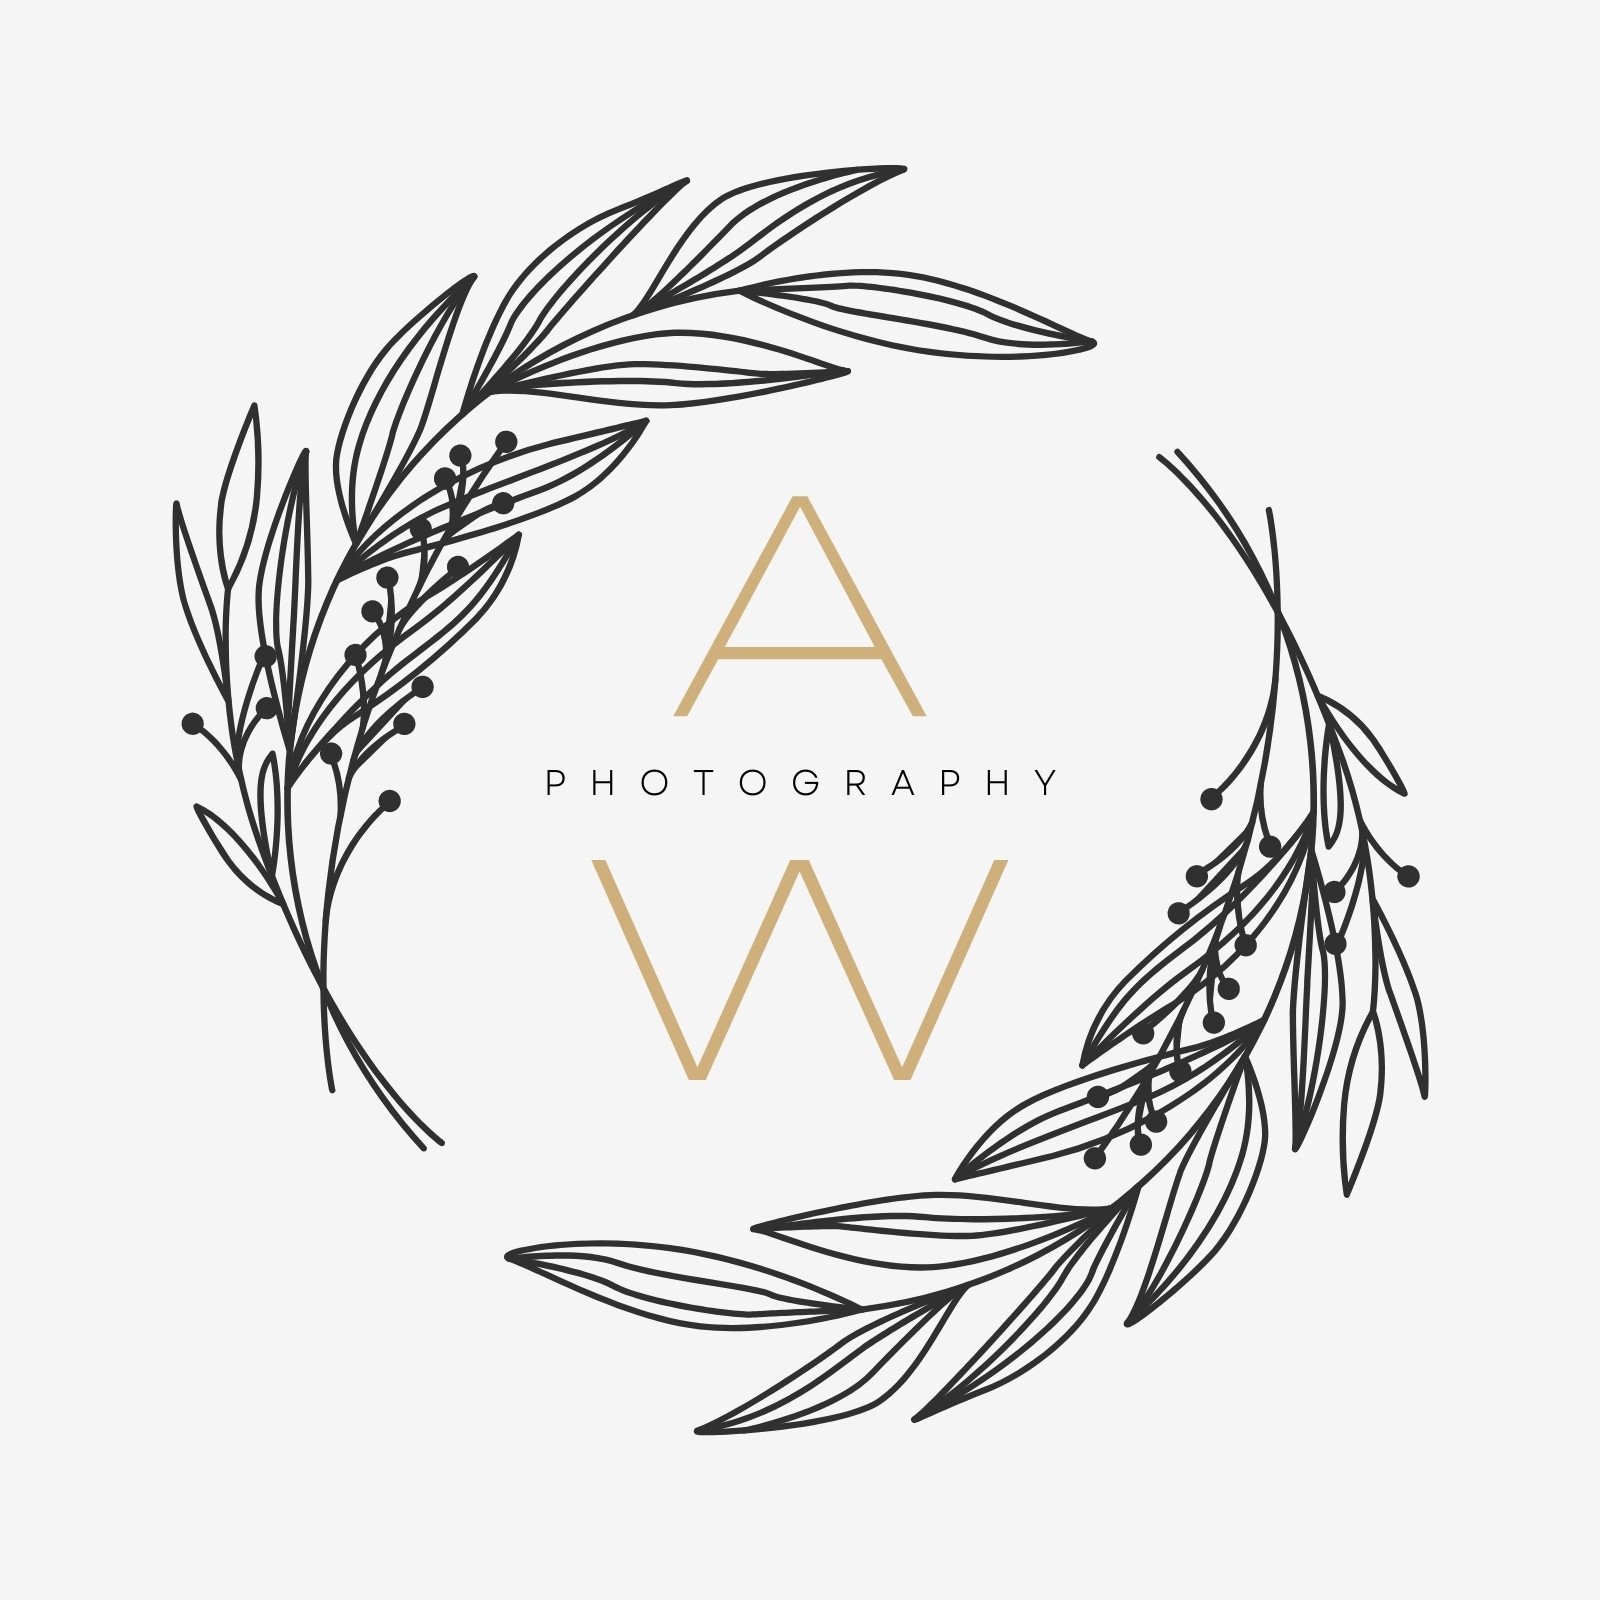 Customize 1,980+ Photography Logo Templates Online - Canva